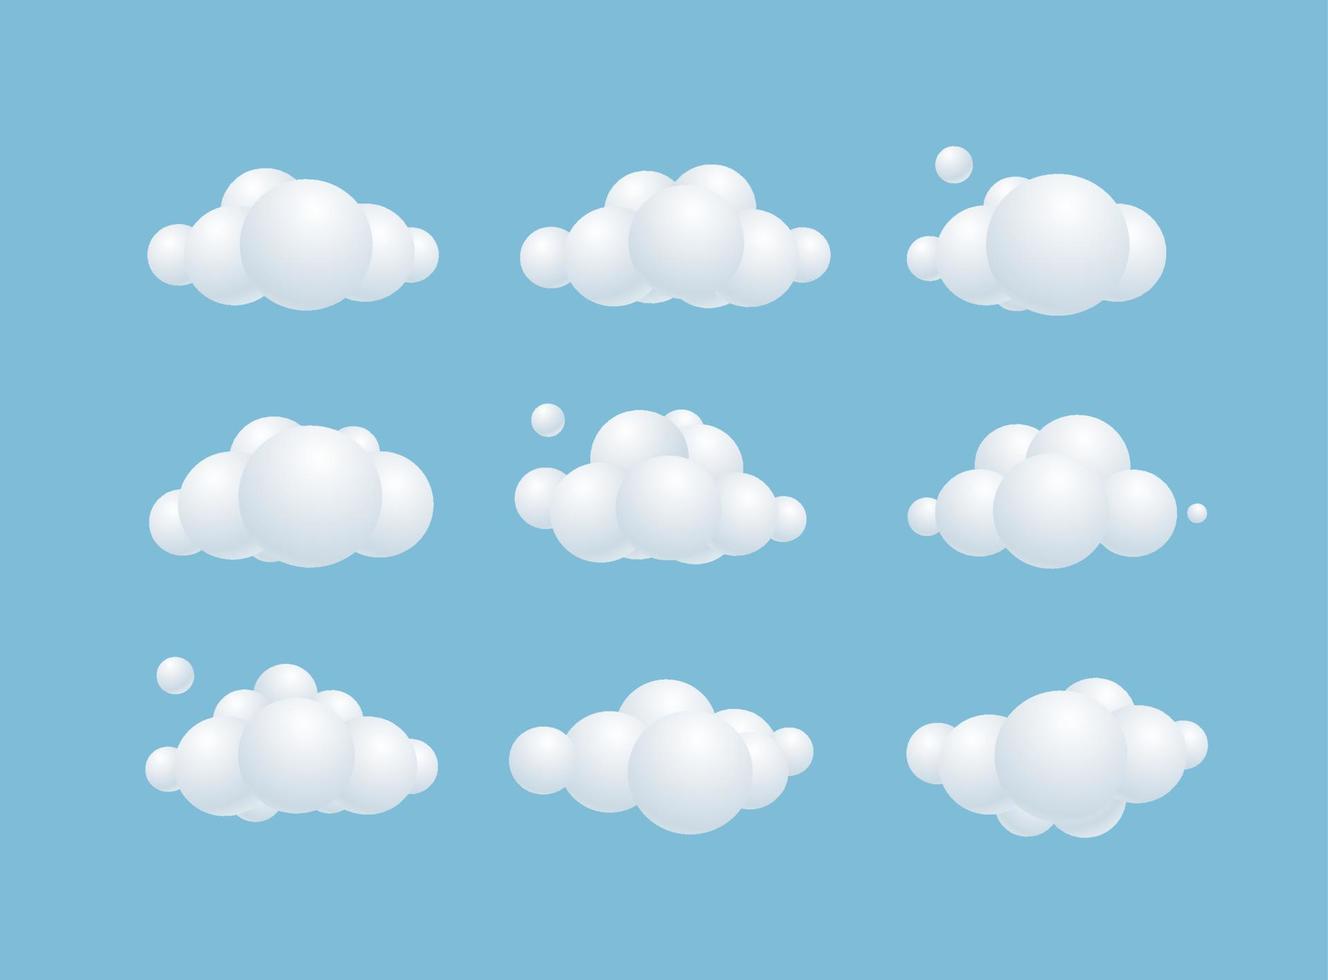 3d Different Clouds Set Plasticine Cartoon Style. Vector